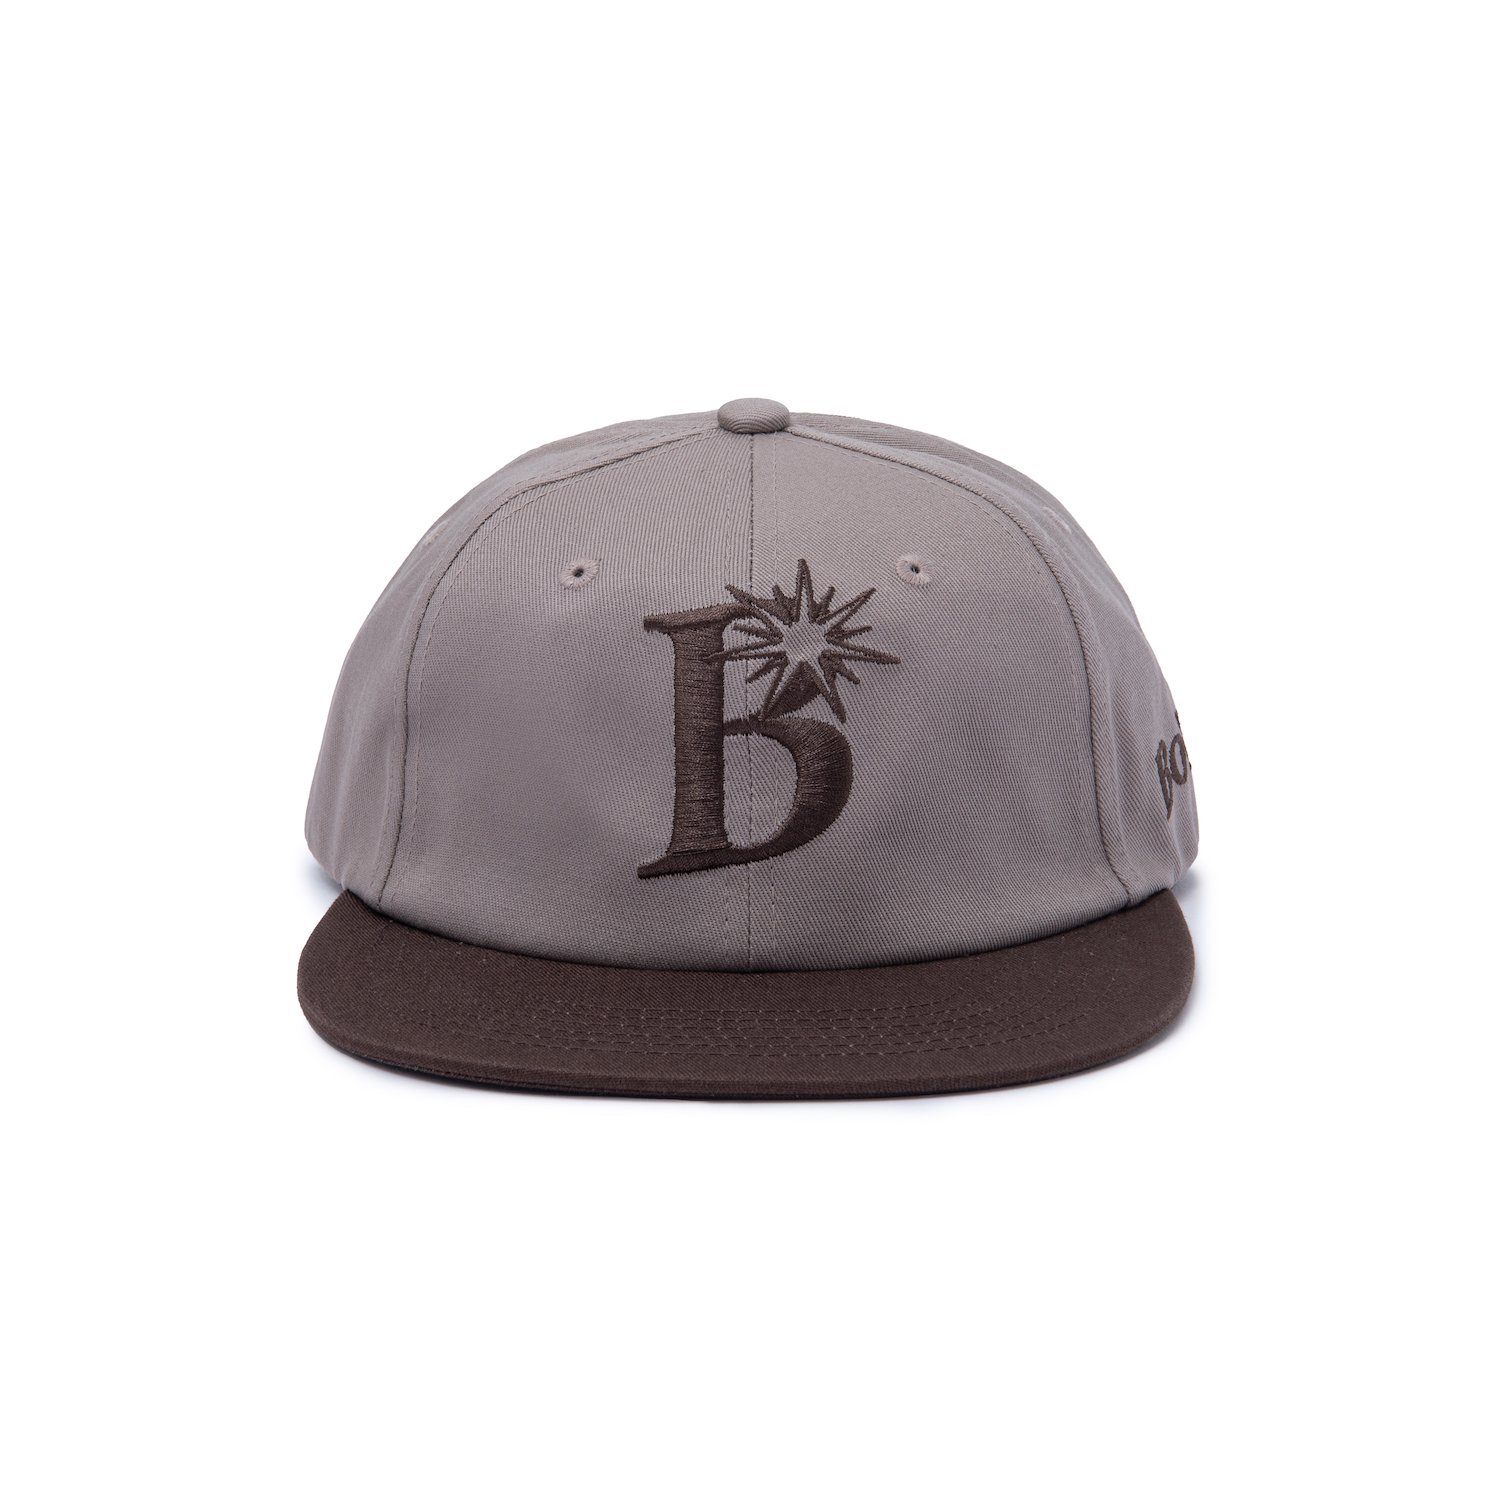 BoTT<br>B Logo Cap<br>